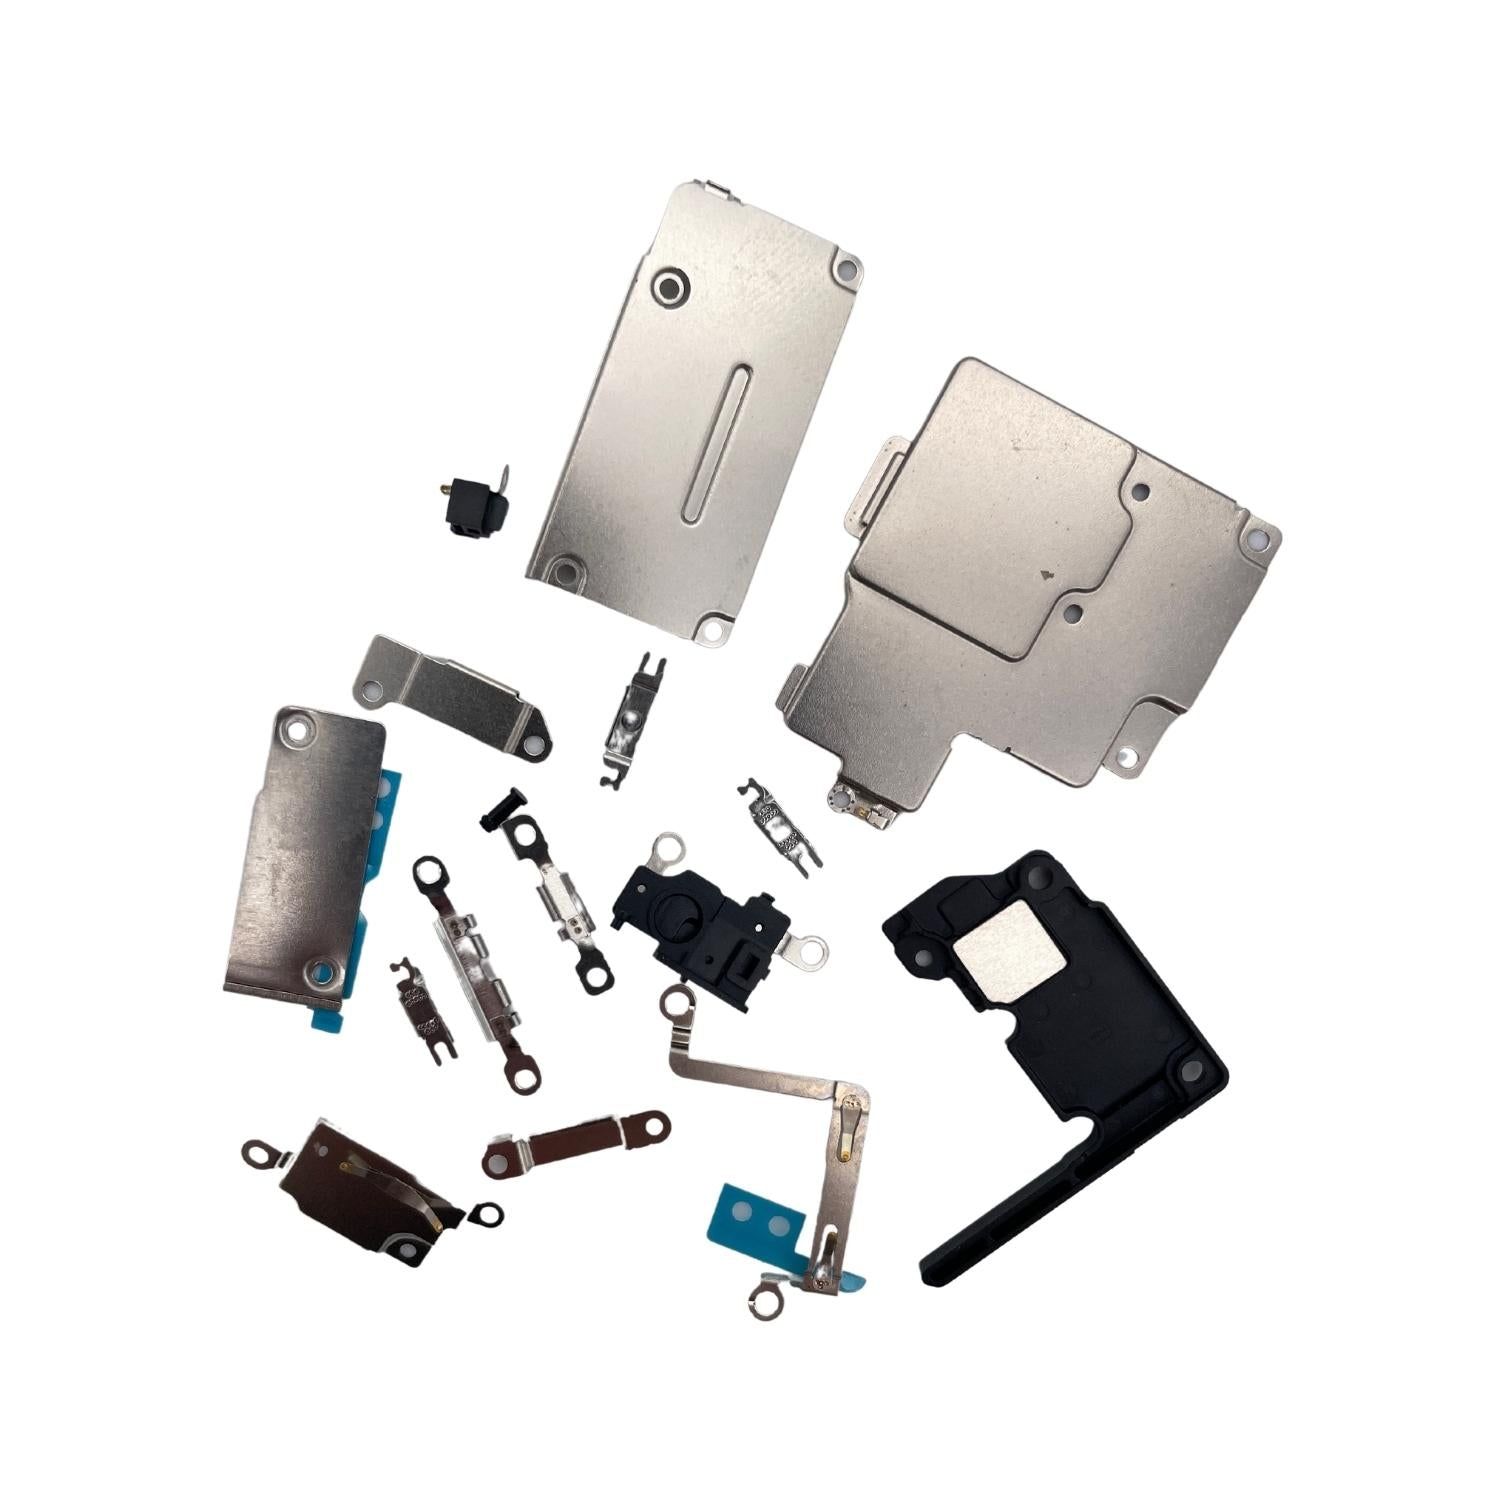 Bracket Sets (Internal Metal Shields) for iPhone 12